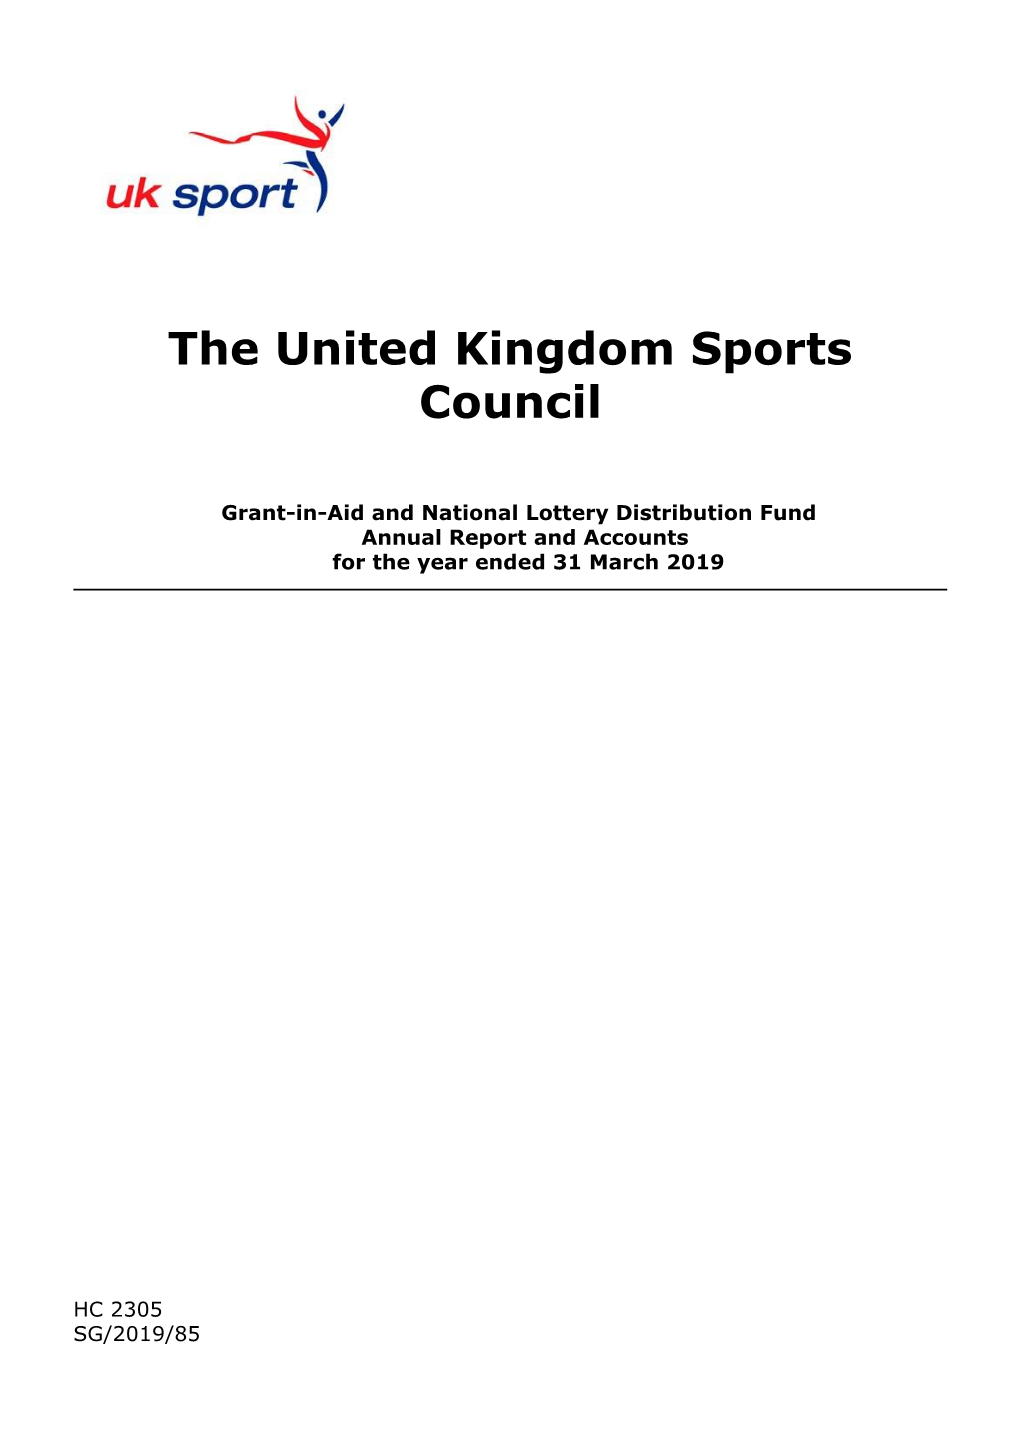 UK Sport Annual Report 2018-19